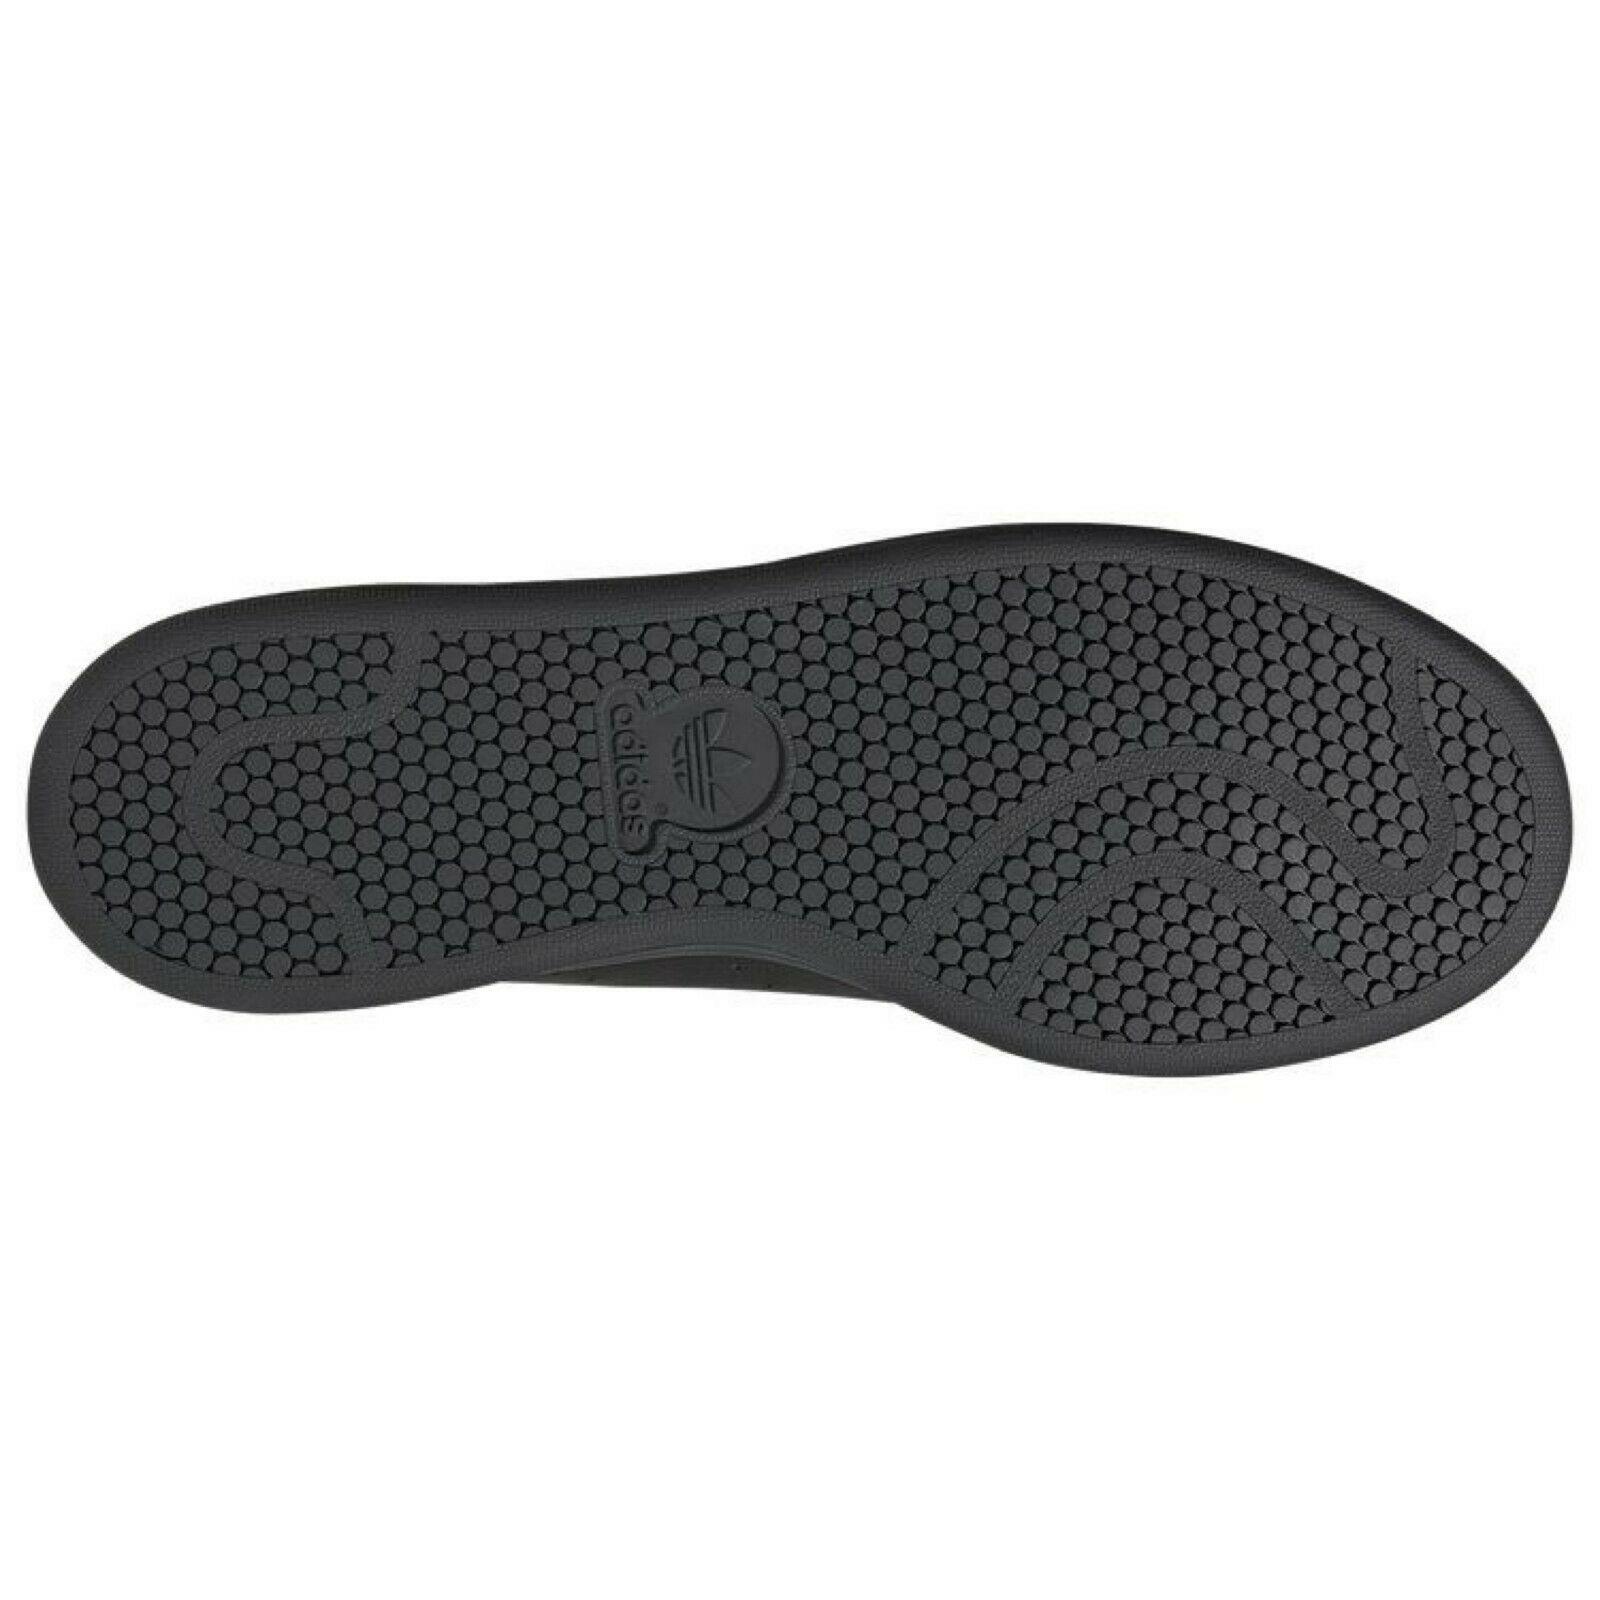 Adidas shoes Originals Stan Smith - Black , Black/Volt Manufacturer 4